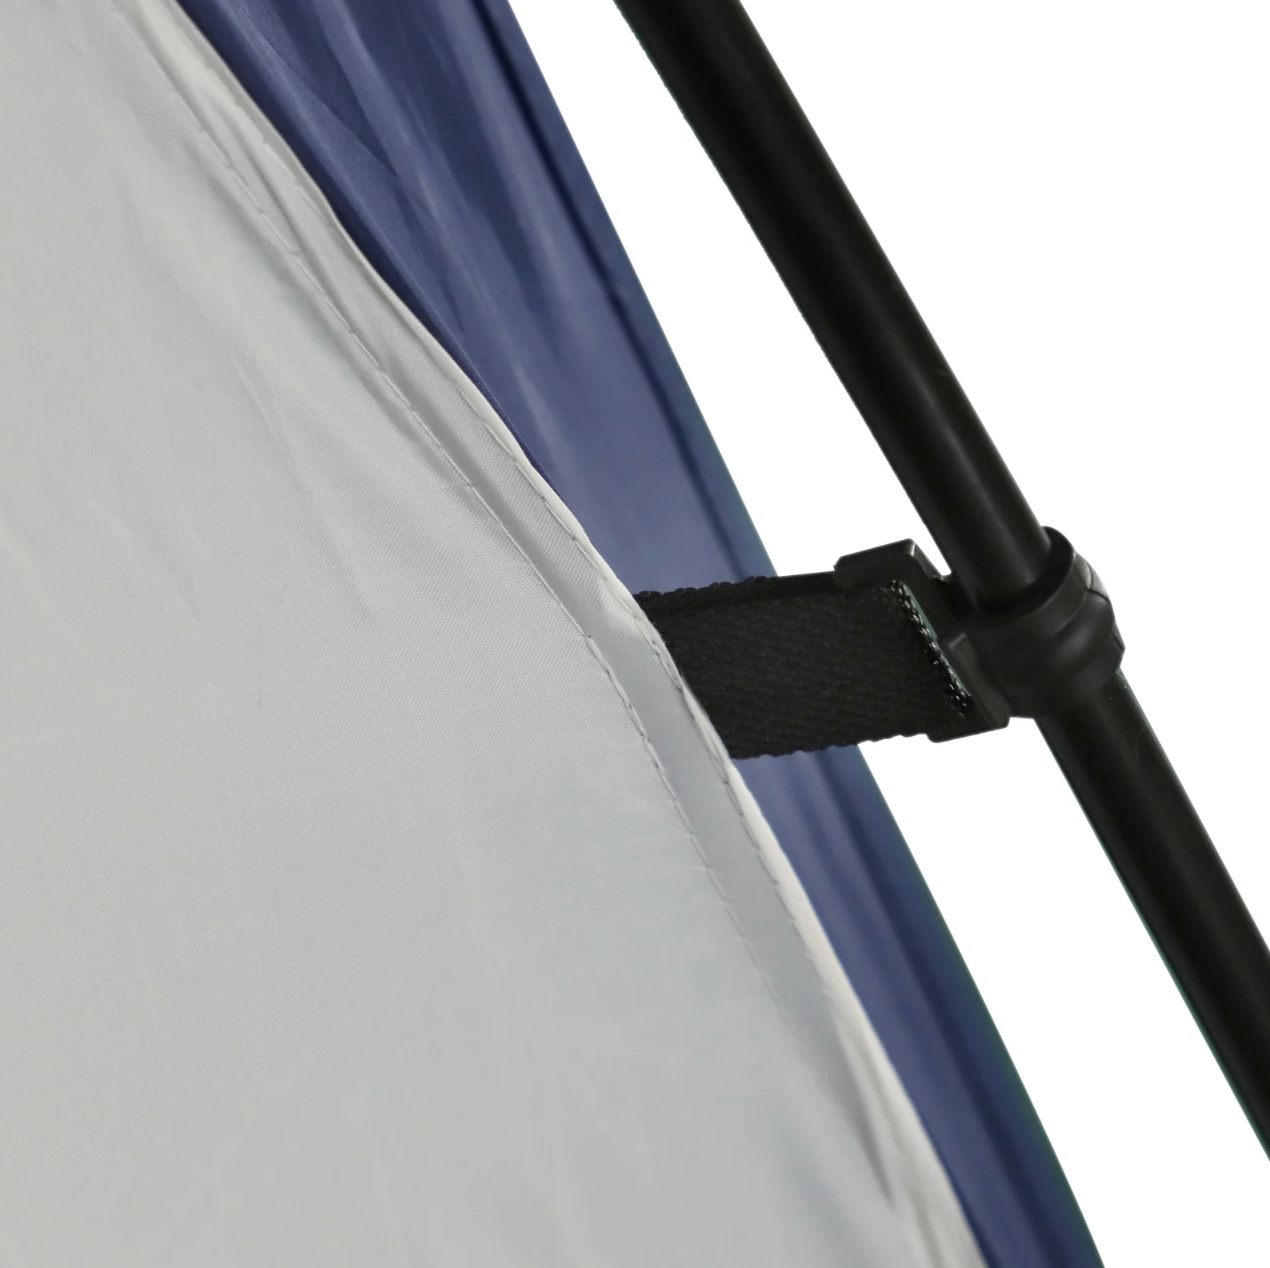 Nancy's Gladstone Party Tent - Garden Pavilion - Weatherproof - Fiberglass rod - Polyester - Cream - White - Blue - 350 x 350 cm